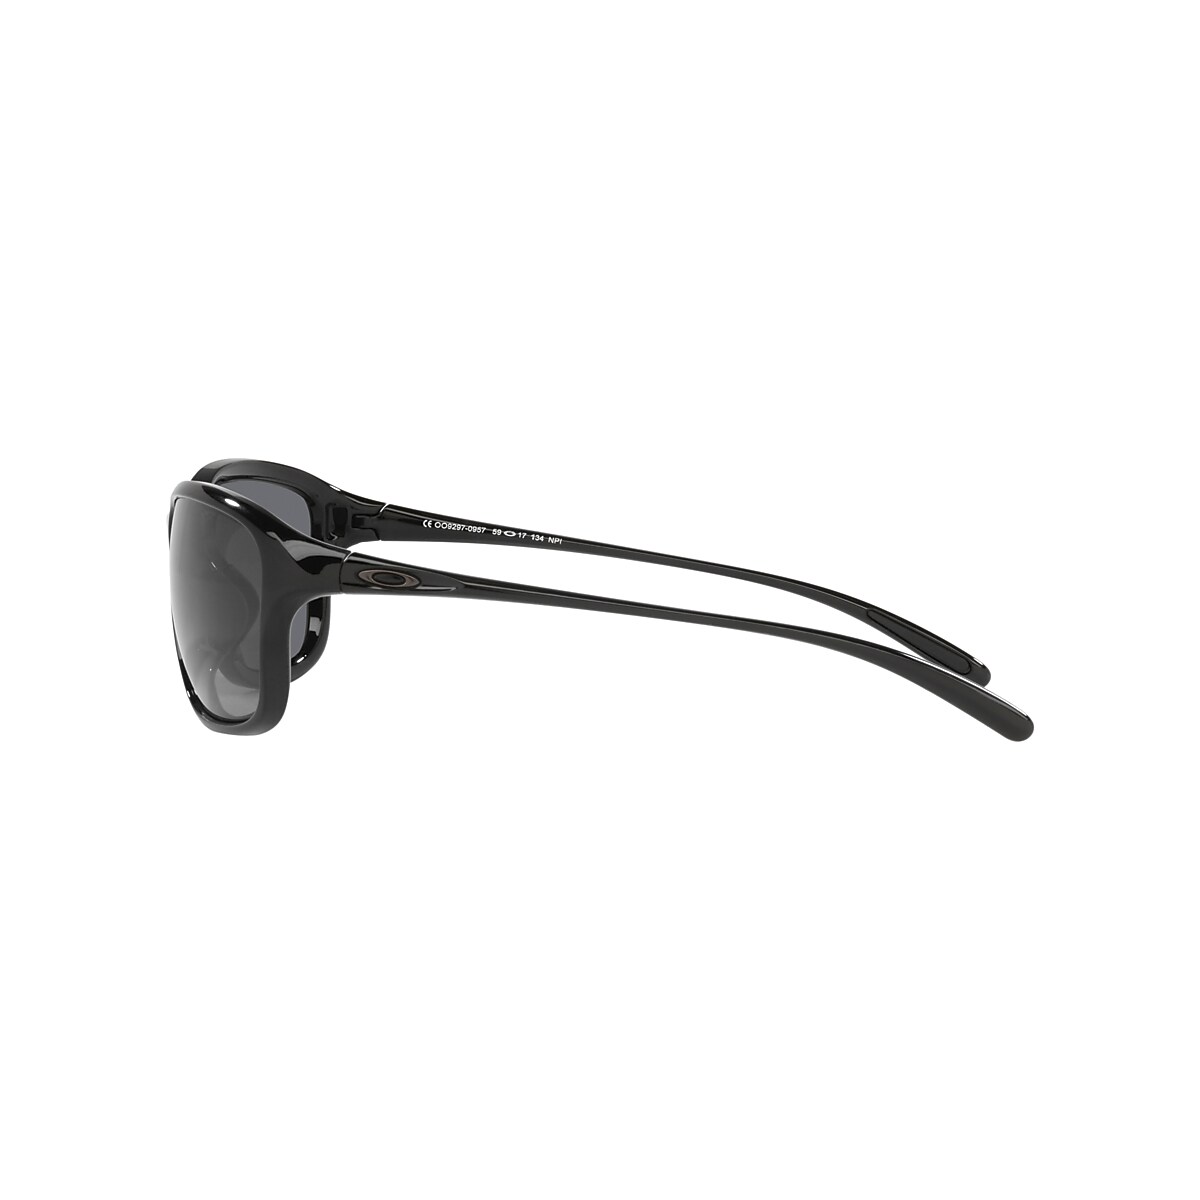 Oakley She’s Unstoppable Sunglasses Black Lens Polarized OO9297-0957  59:17-134